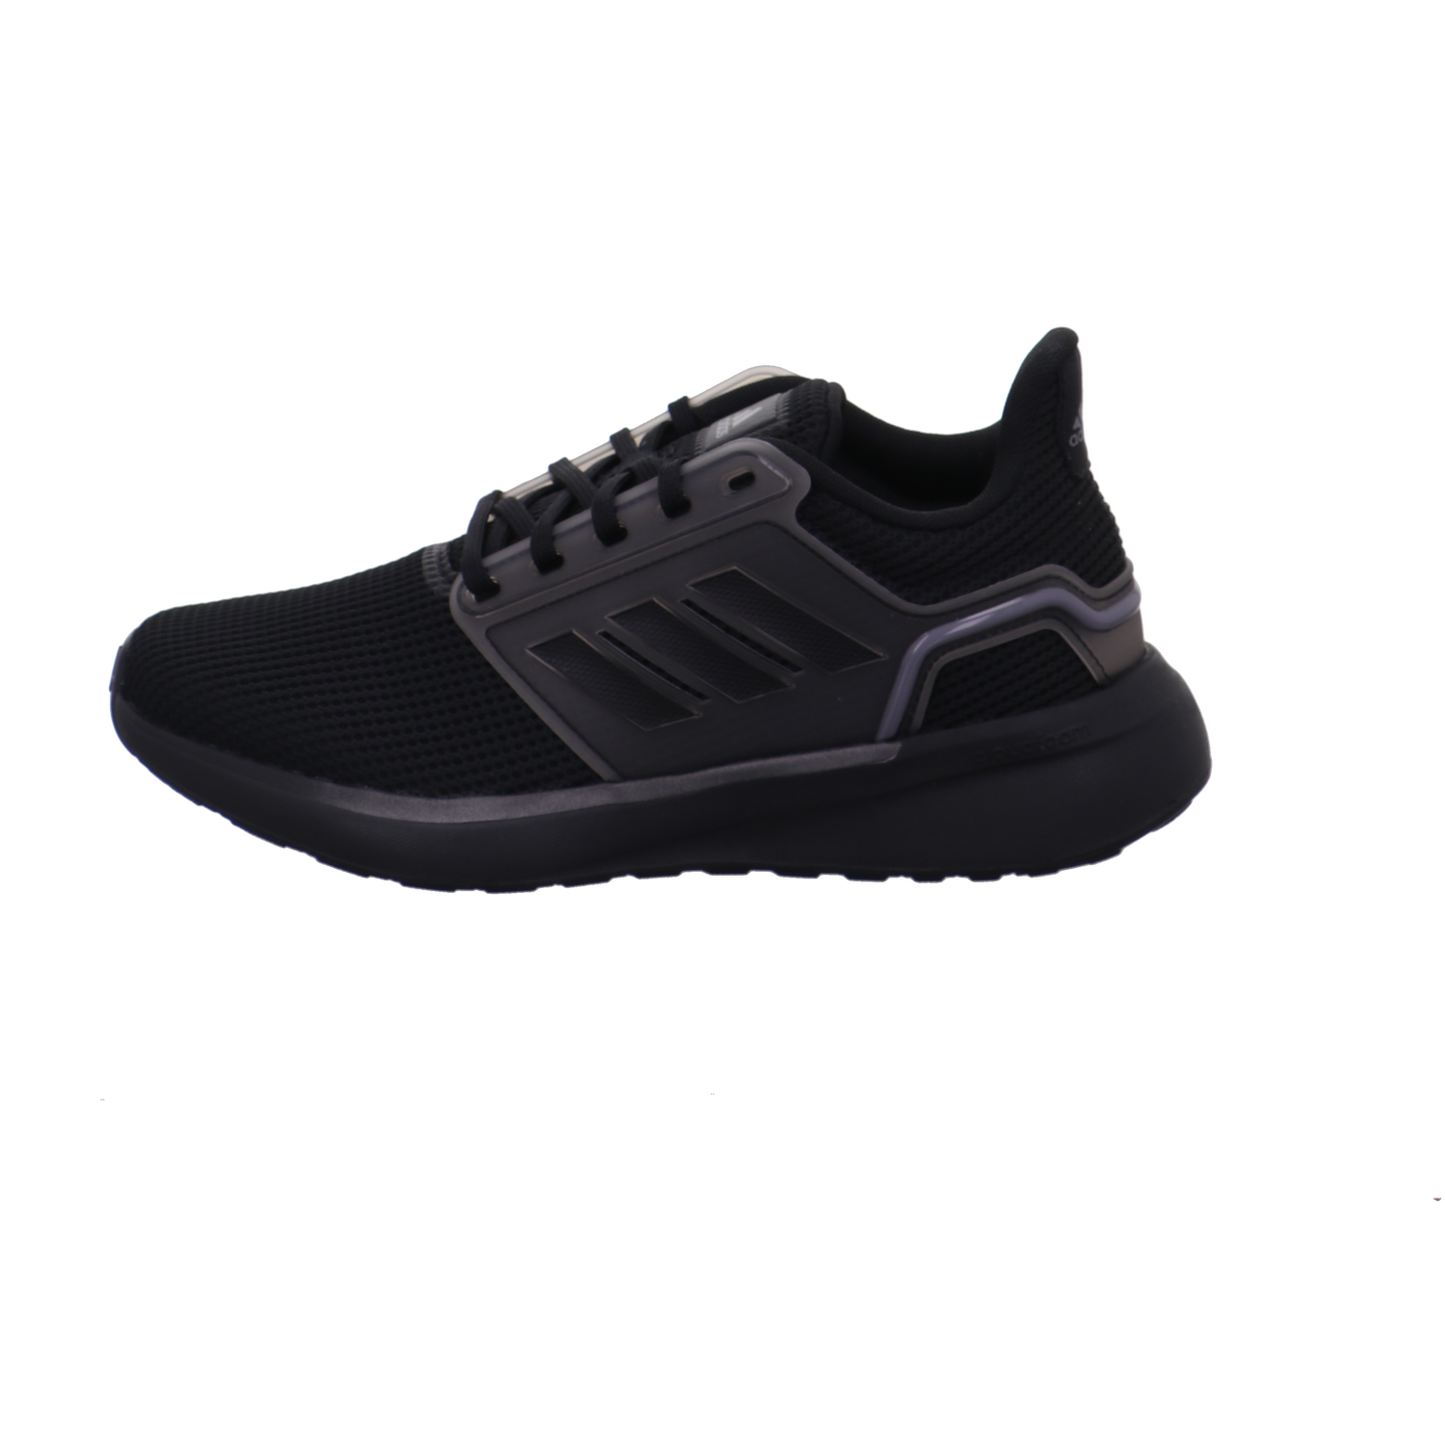 Adidas Sneaker schwarz kombi Bild1